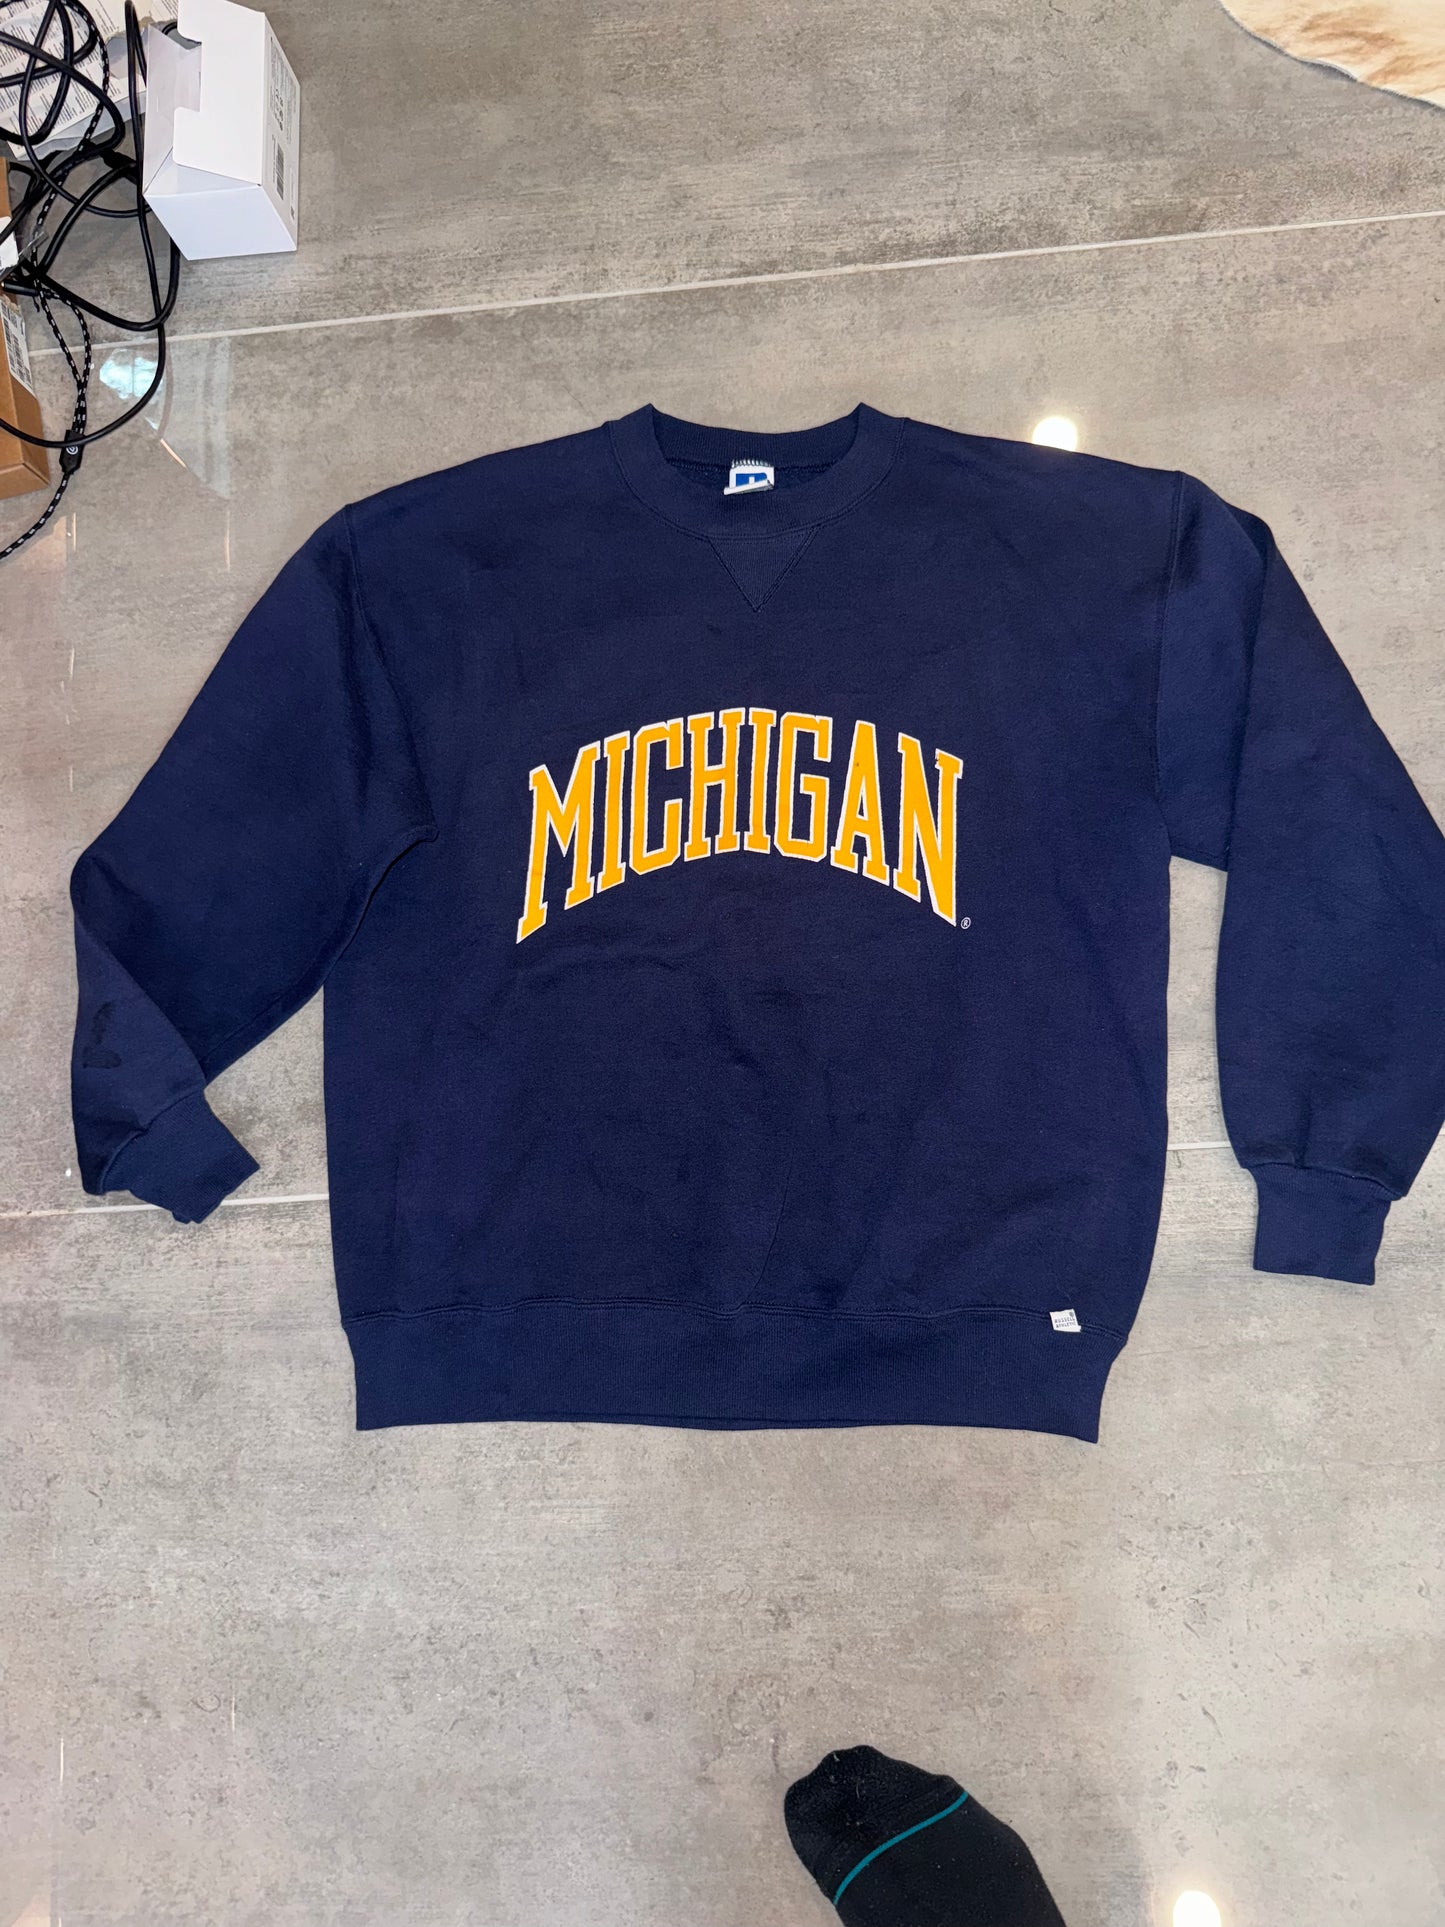 Vintage Nike Champion Michigan hoodie 90’s